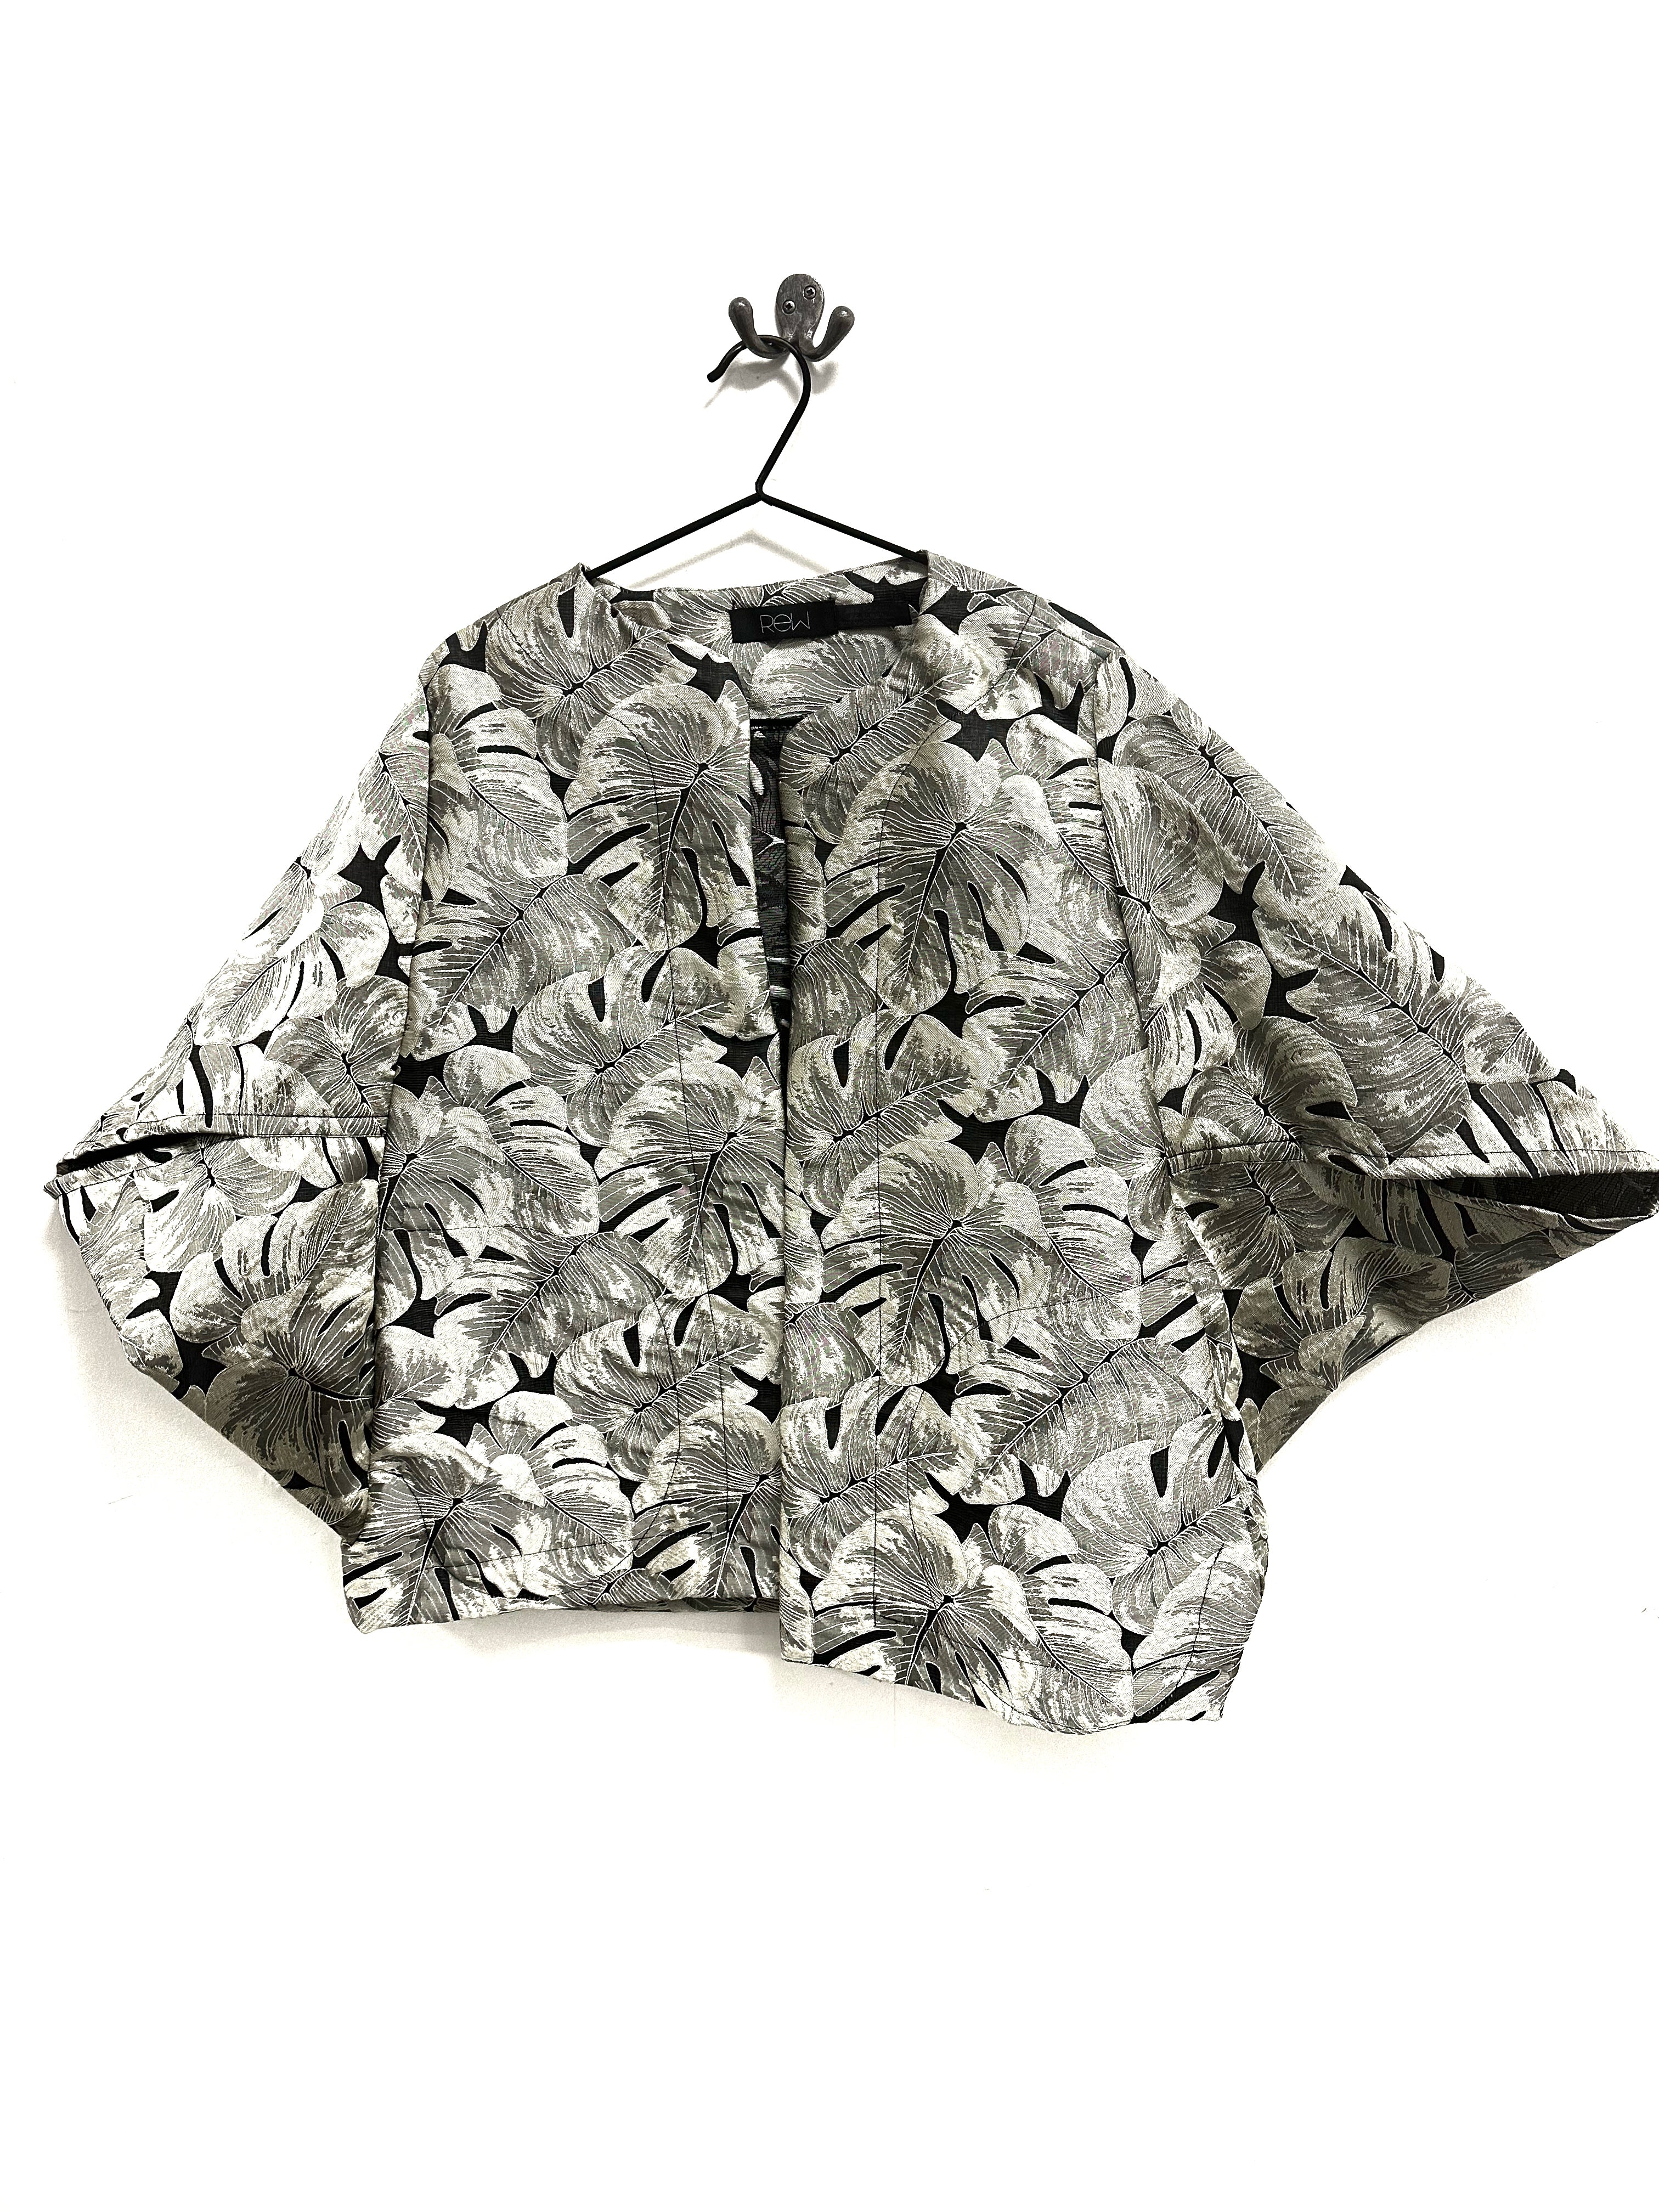 Kimono - Sepia Jaquard Floral Jacket.